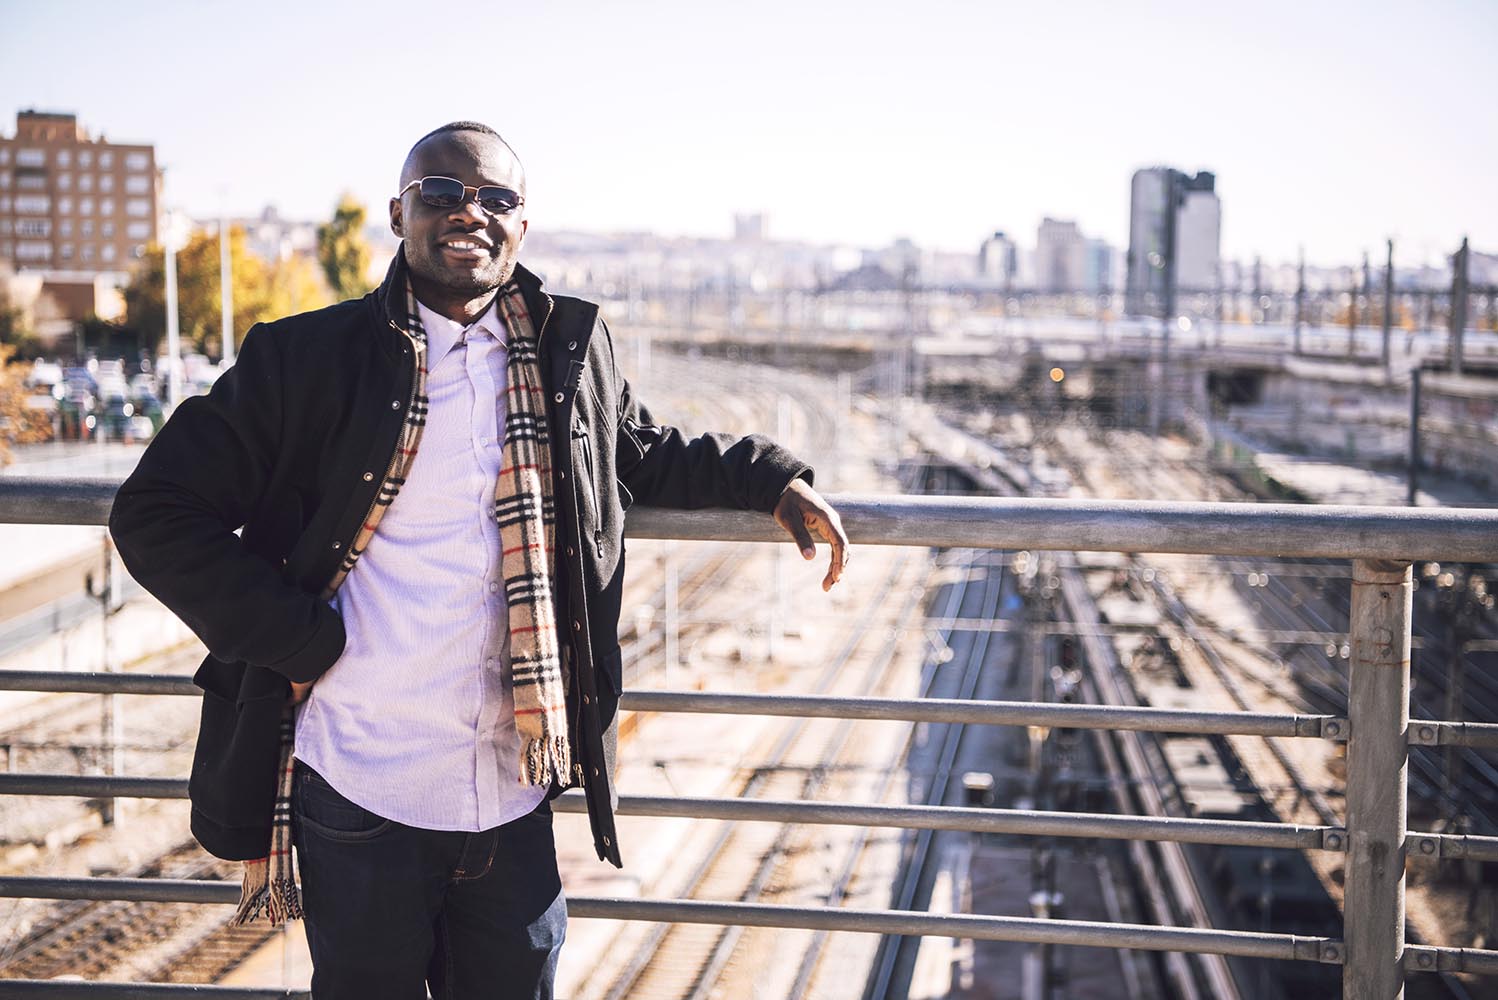 Stylish confident black man on urban background